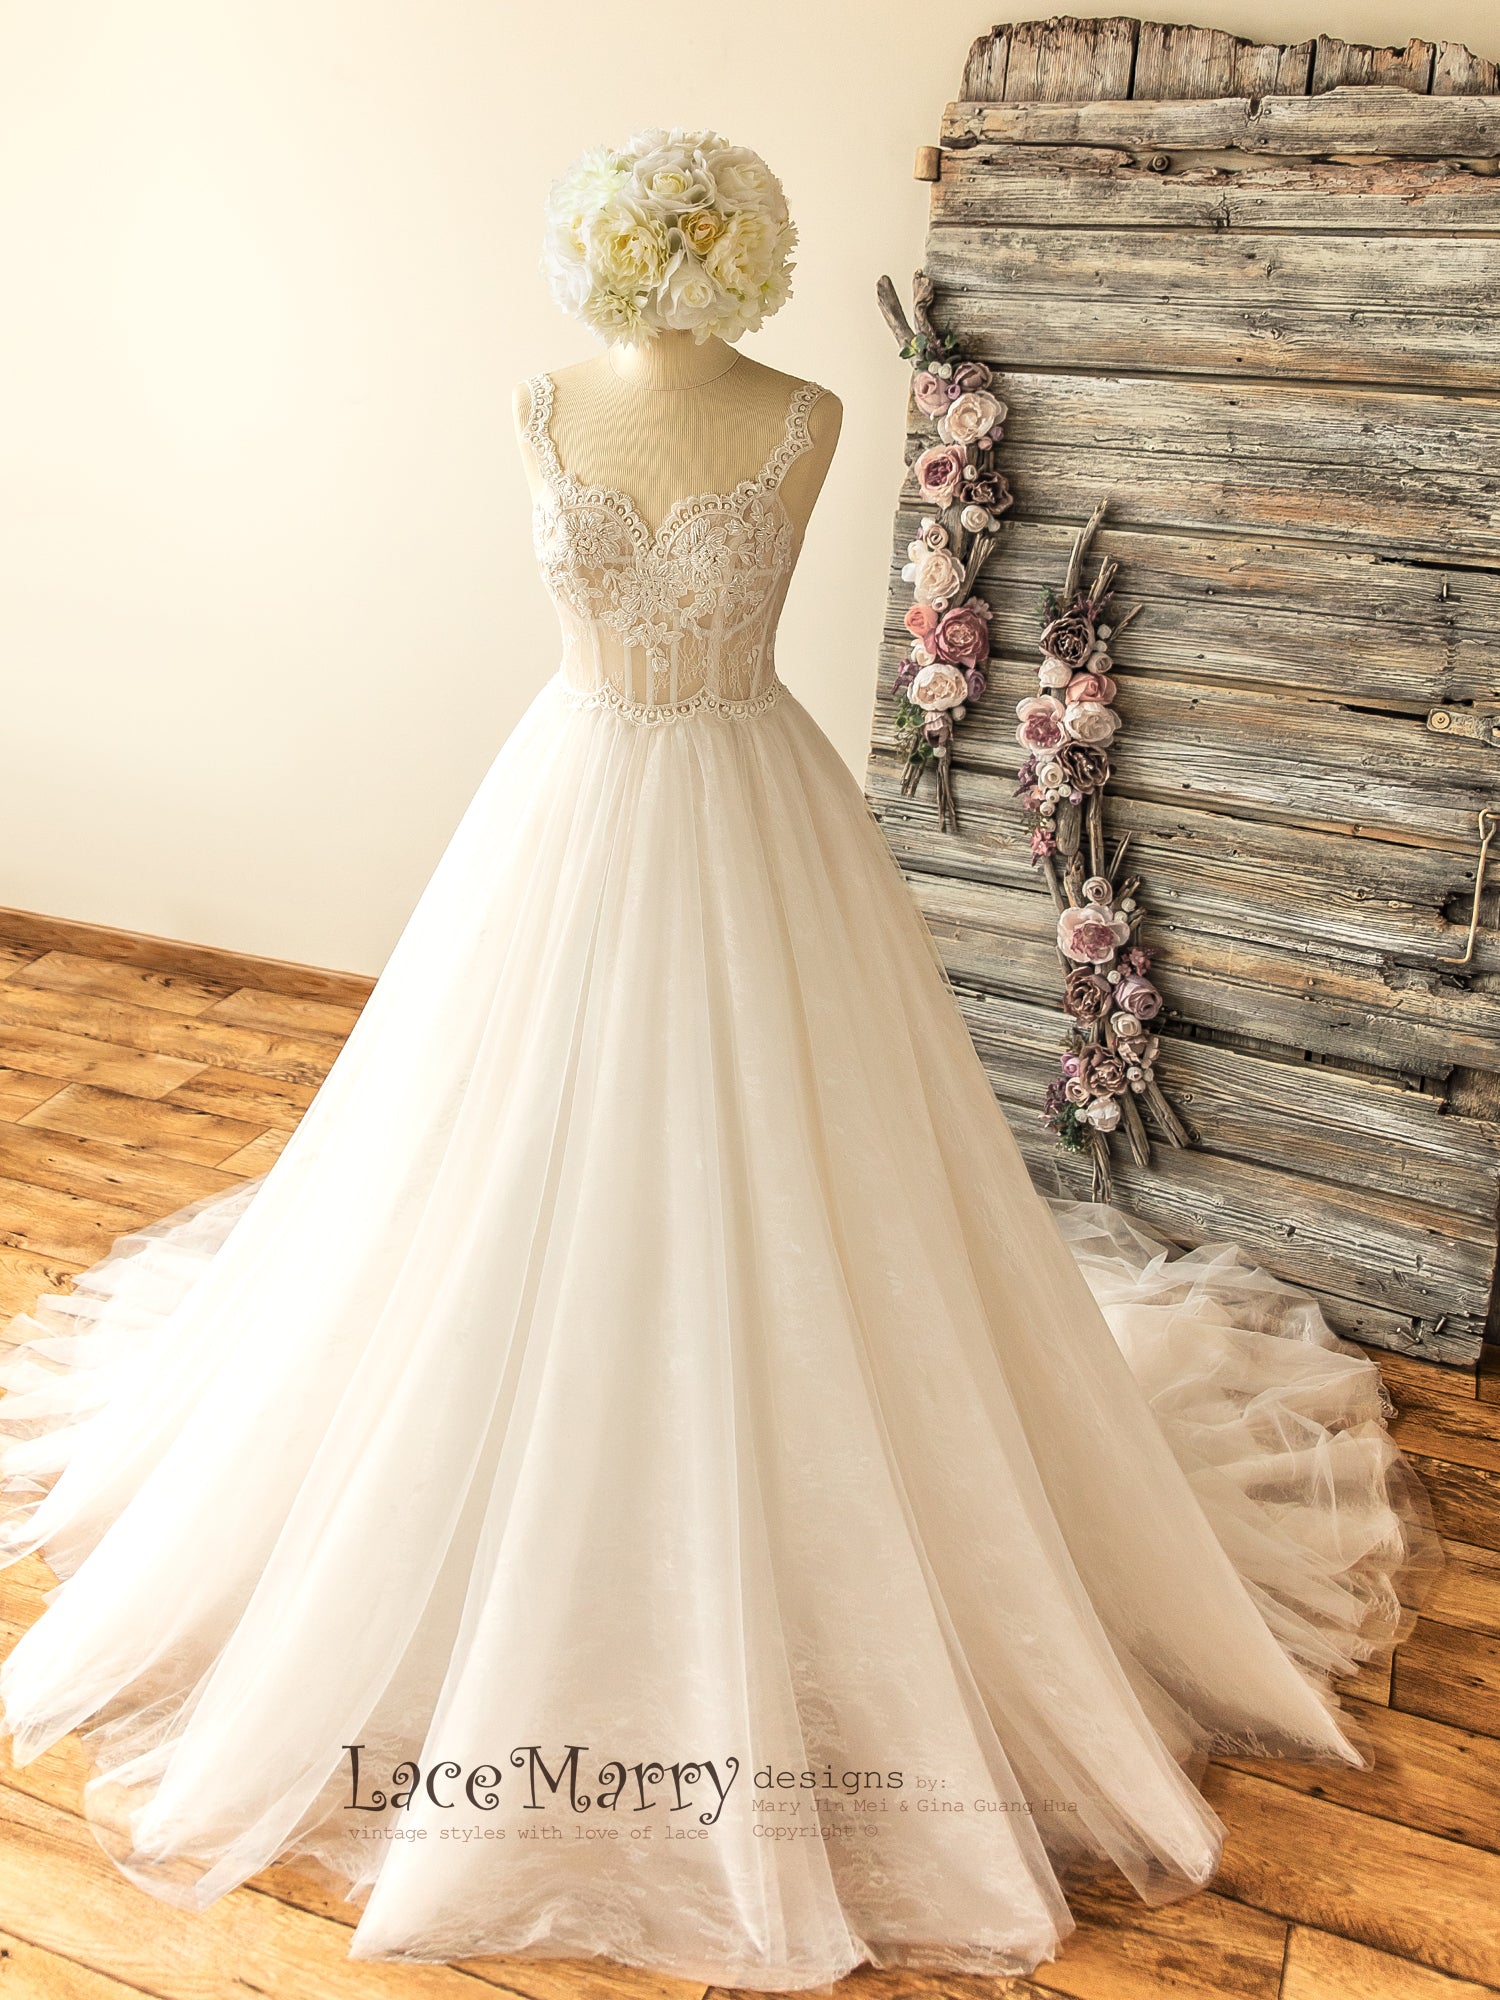 Swirl Lace Strapless Wedding Dress With Corset Back, Corset